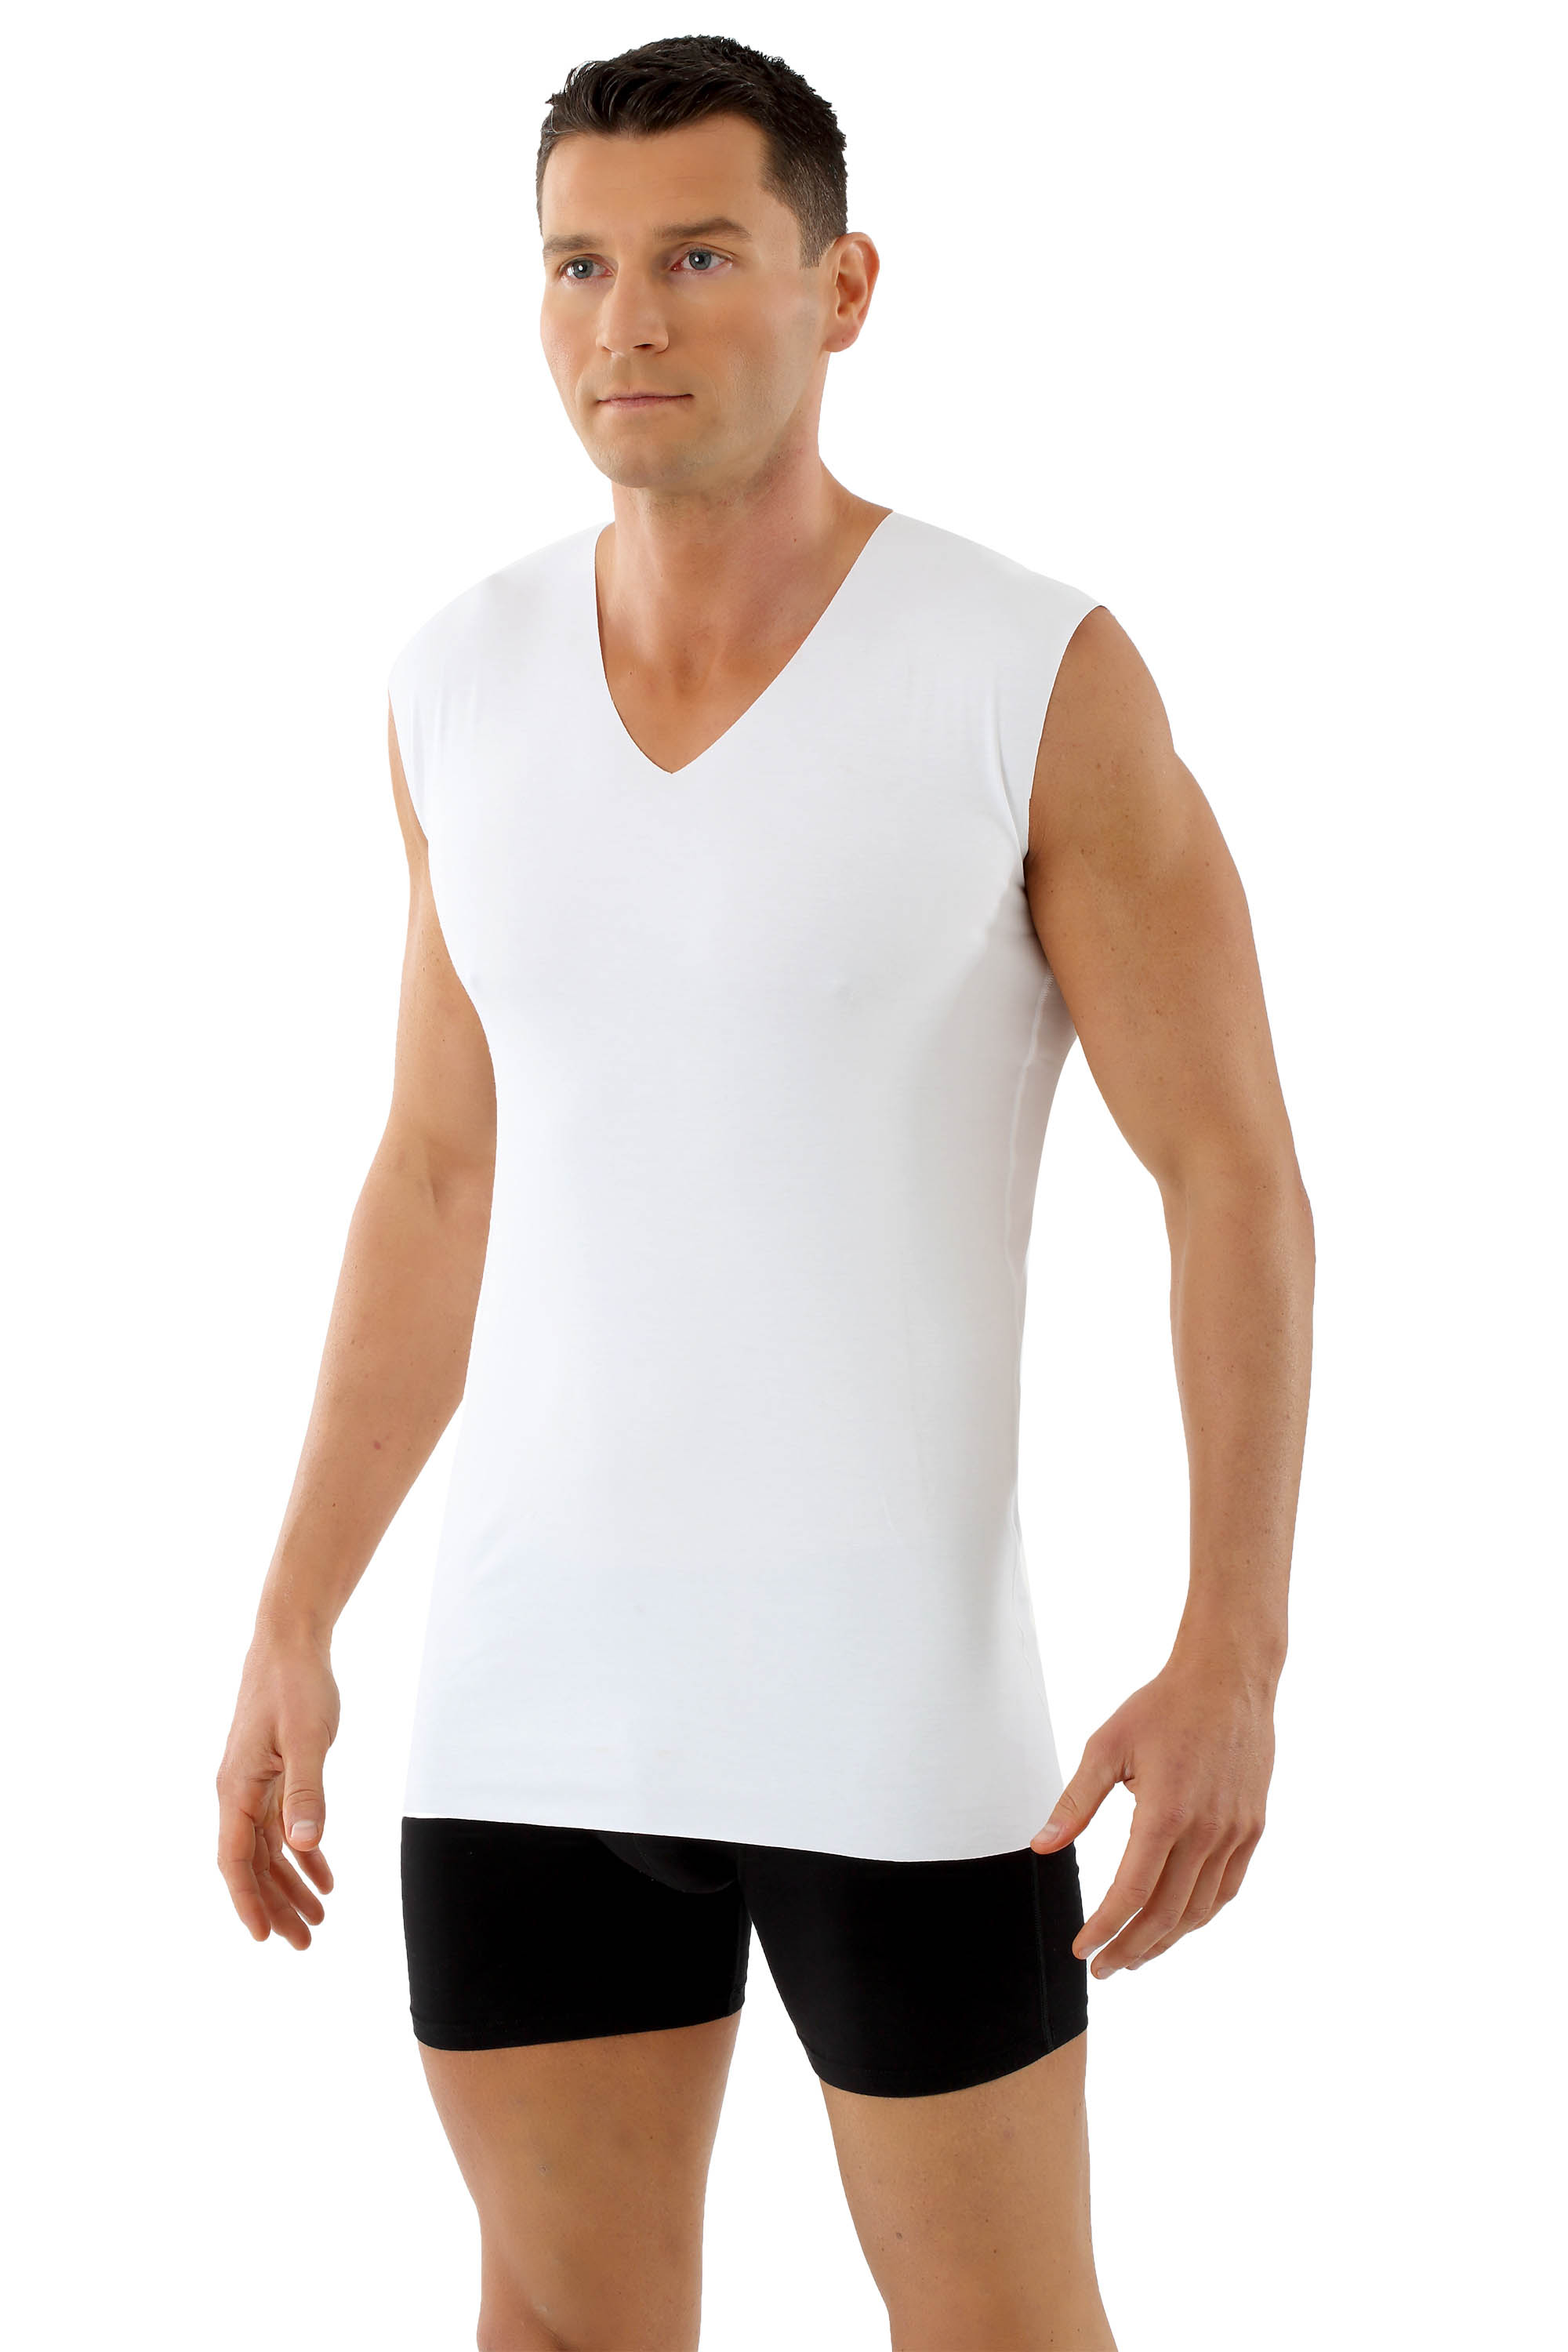 ALBERT KREUZ  Laser cut seamless v-neck undershirt sleeveless stretch  cotton white